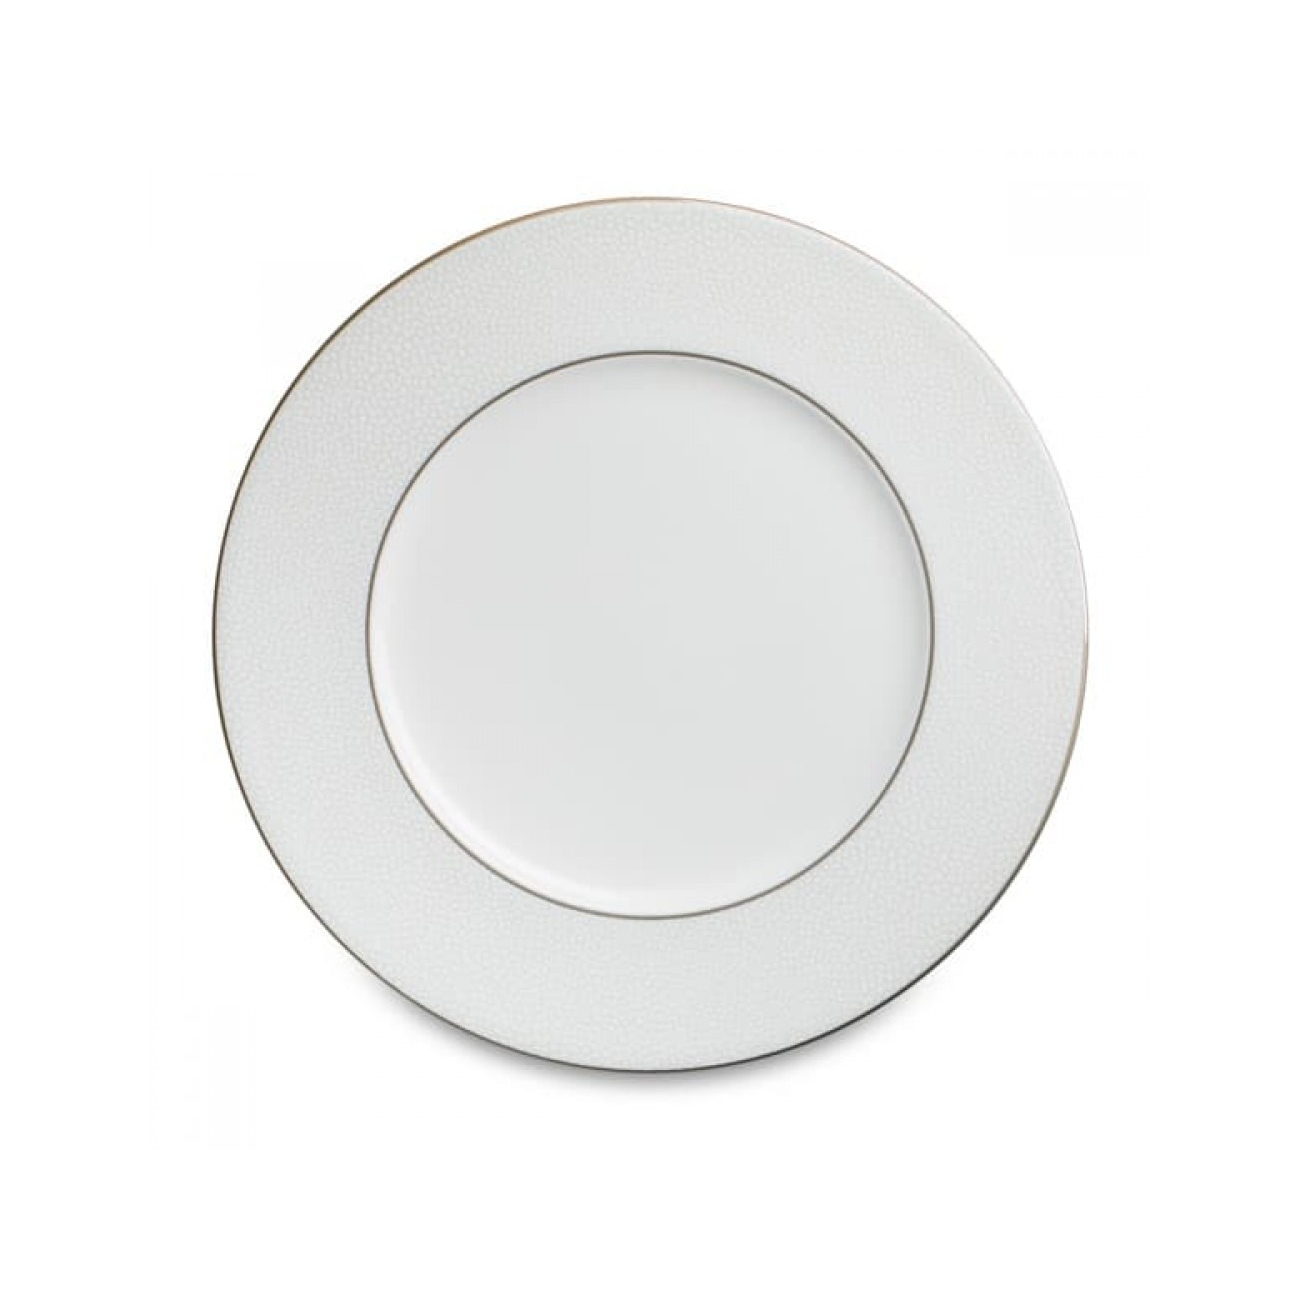 Тарелка обеденная Narumi белый жемчуг 27 см тарелка обеденная narumi лабиринт 28 см